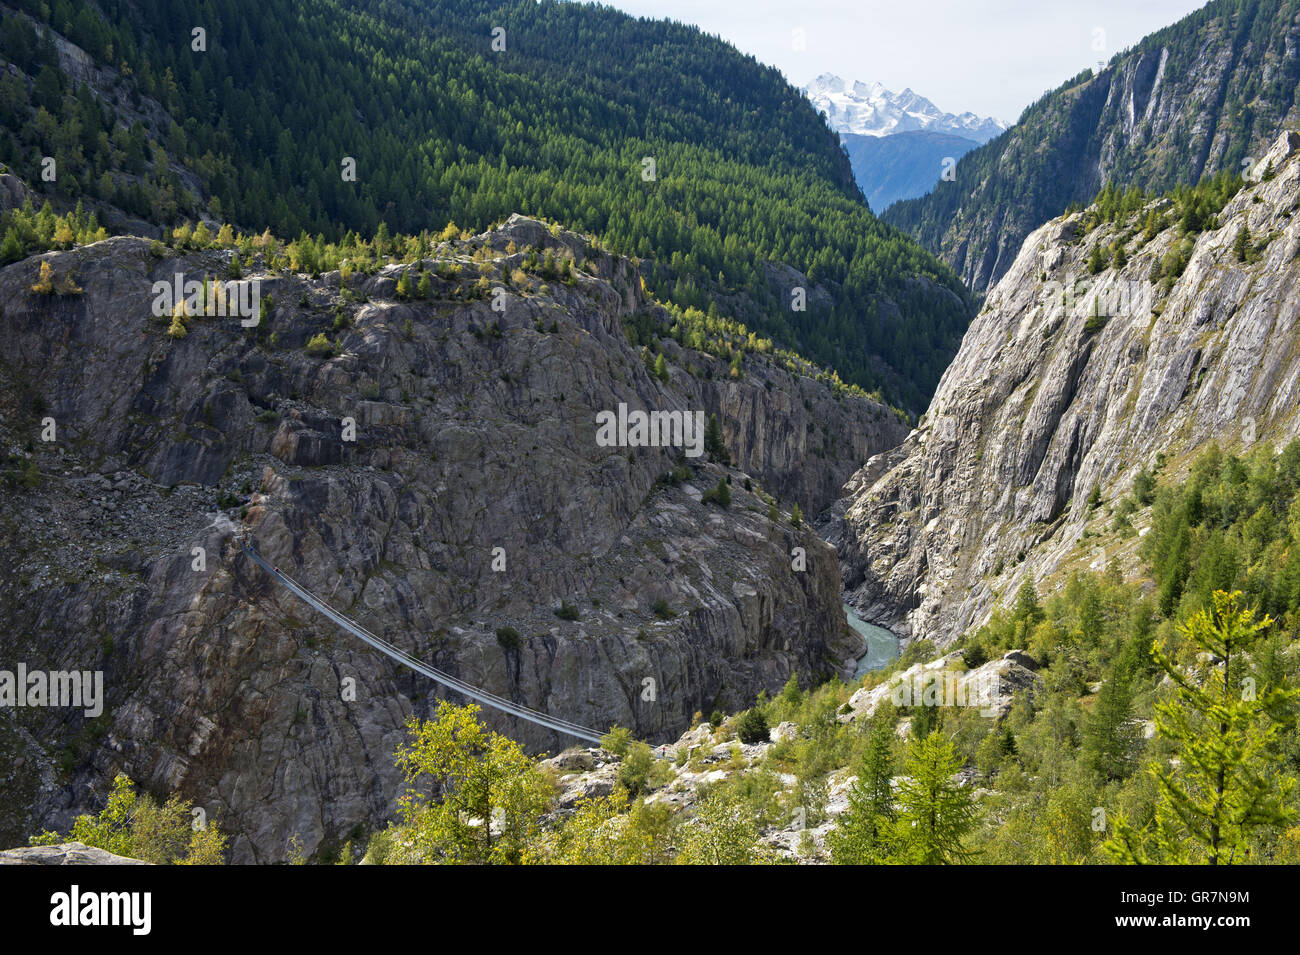 Span Ribbon Bridge Spanning The Massaschlucht Canyon,Tourism Region Belalp, Valais, Switzerland Stock Photo